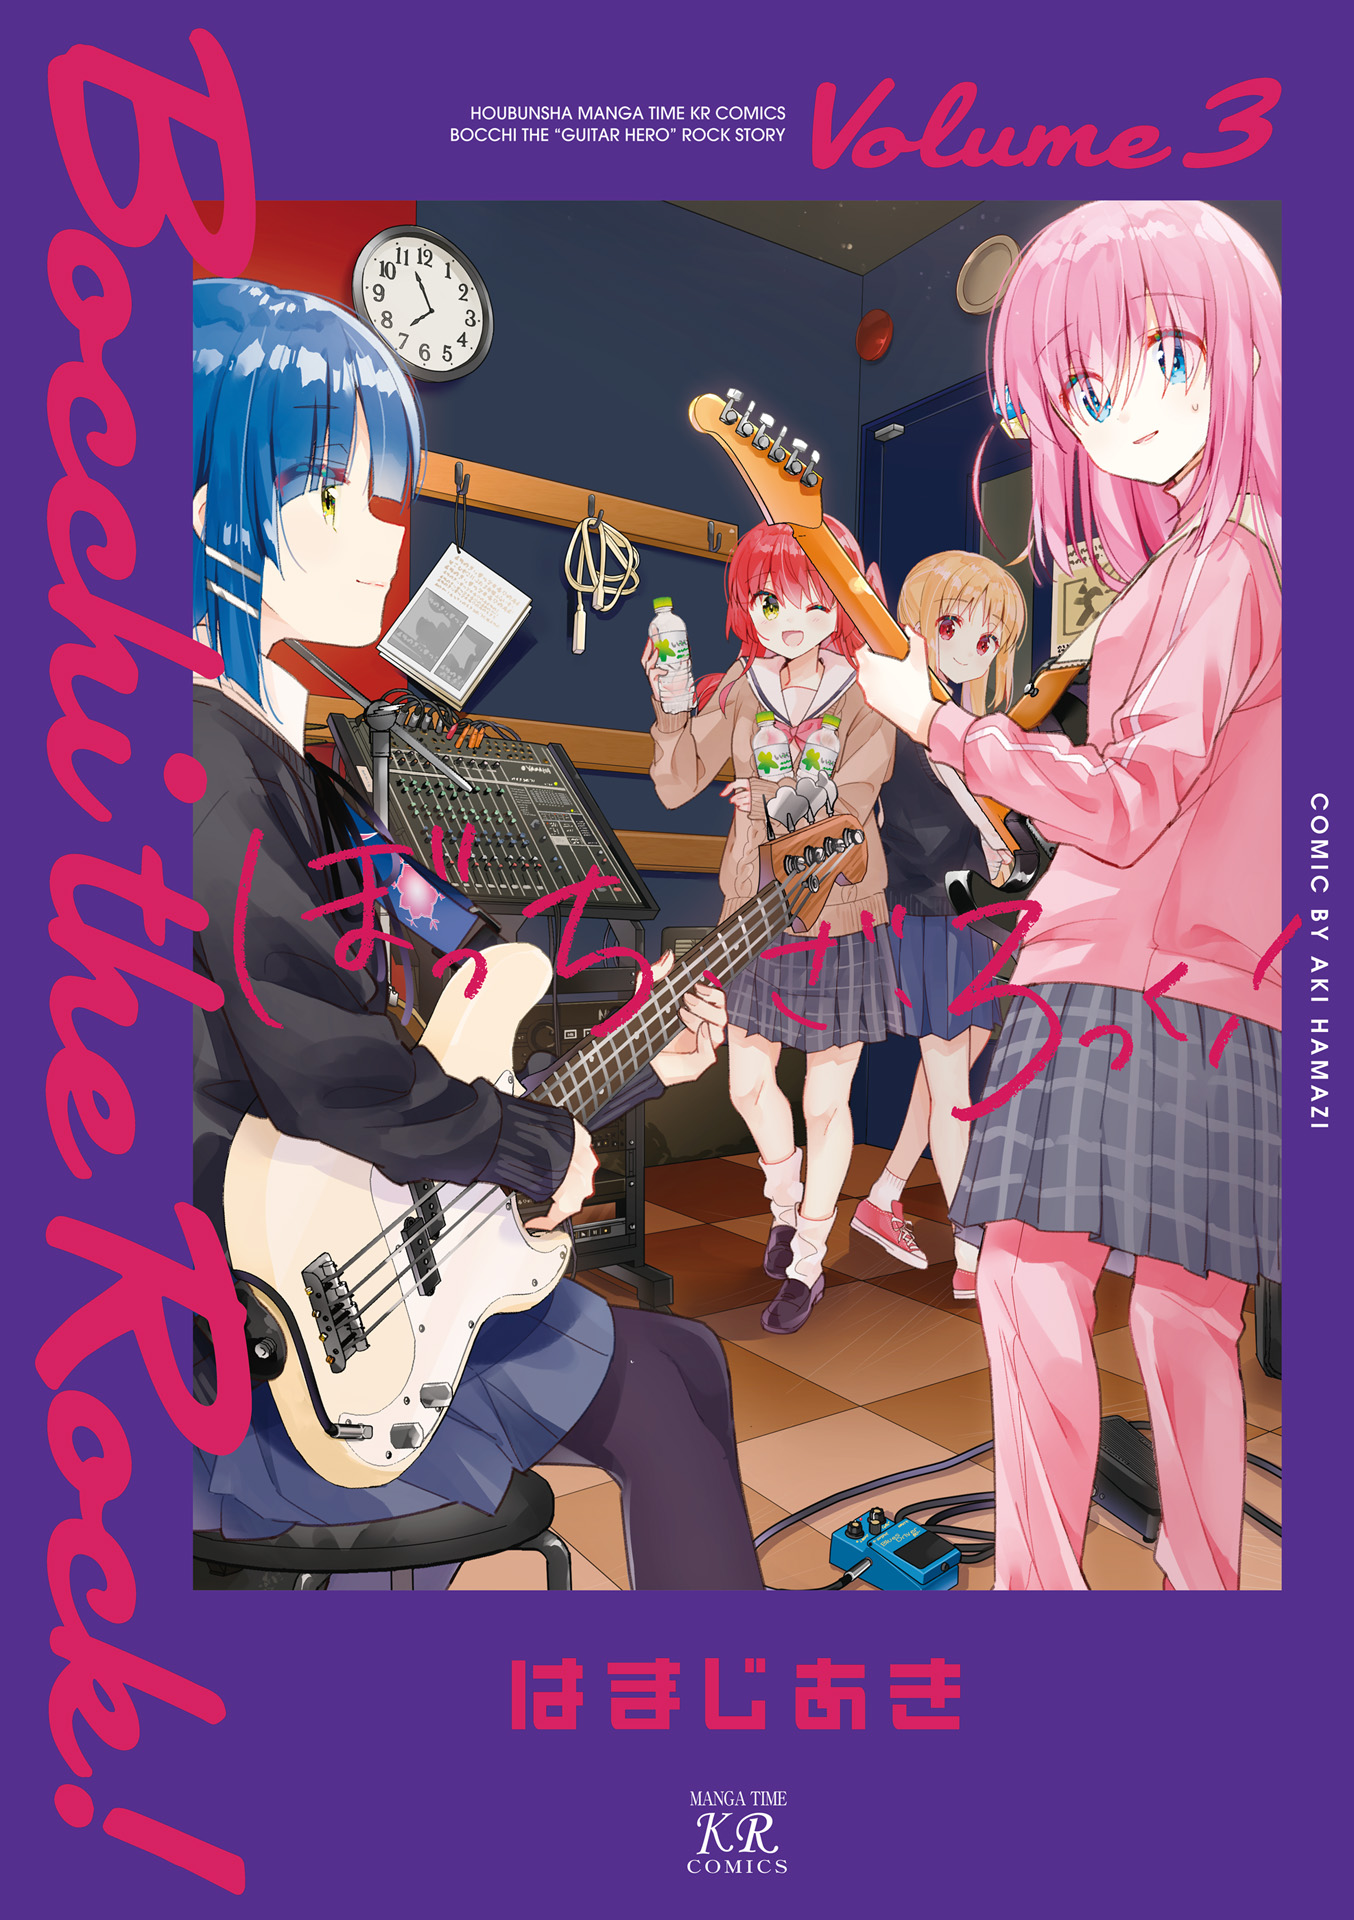 Bocchi The Rock Chapter 33 - Bocchi The Rock Manga Online